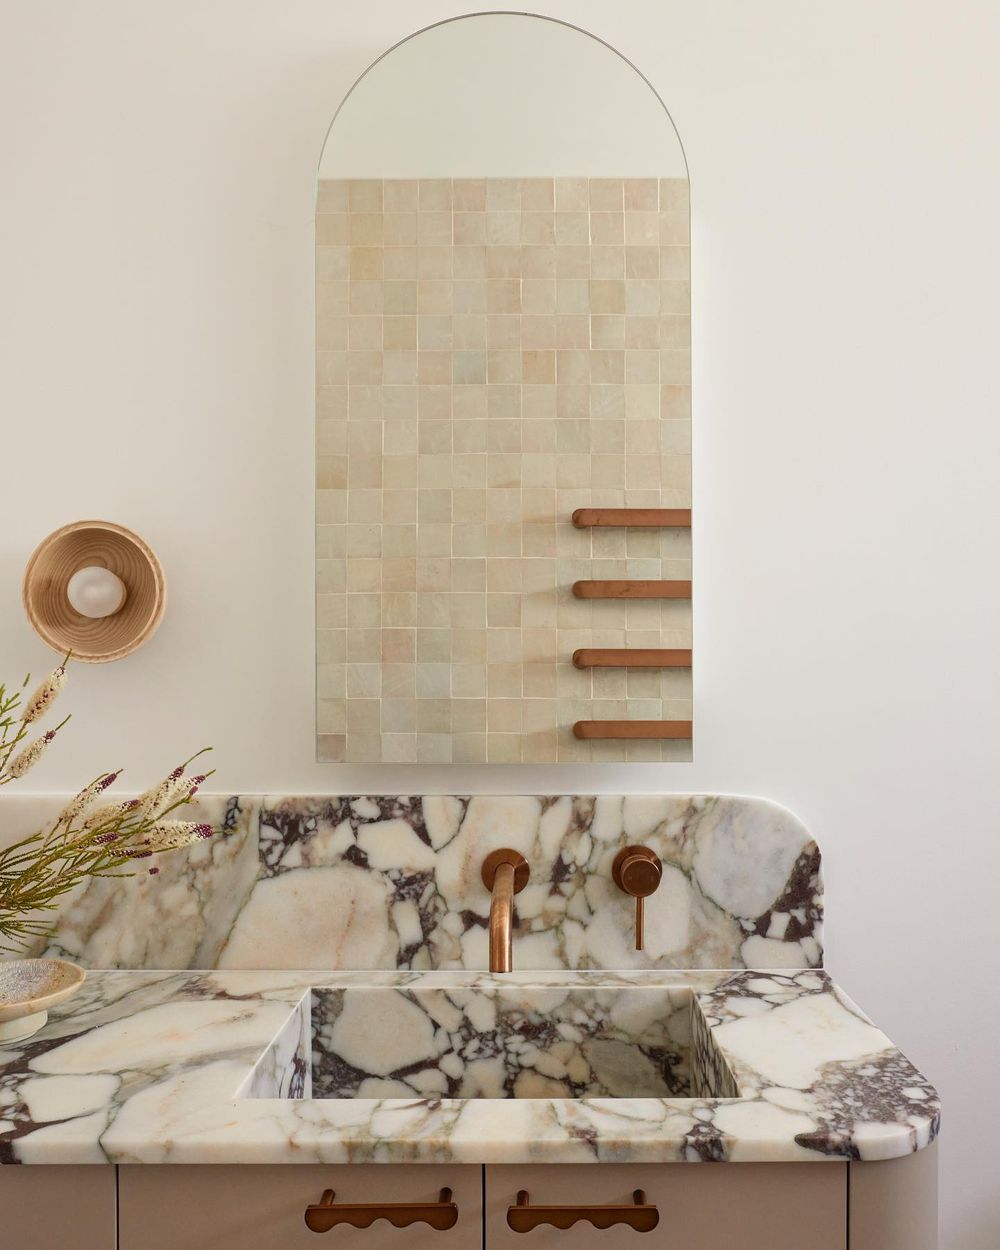 Marble bathroom countertops @folkstudiodesign